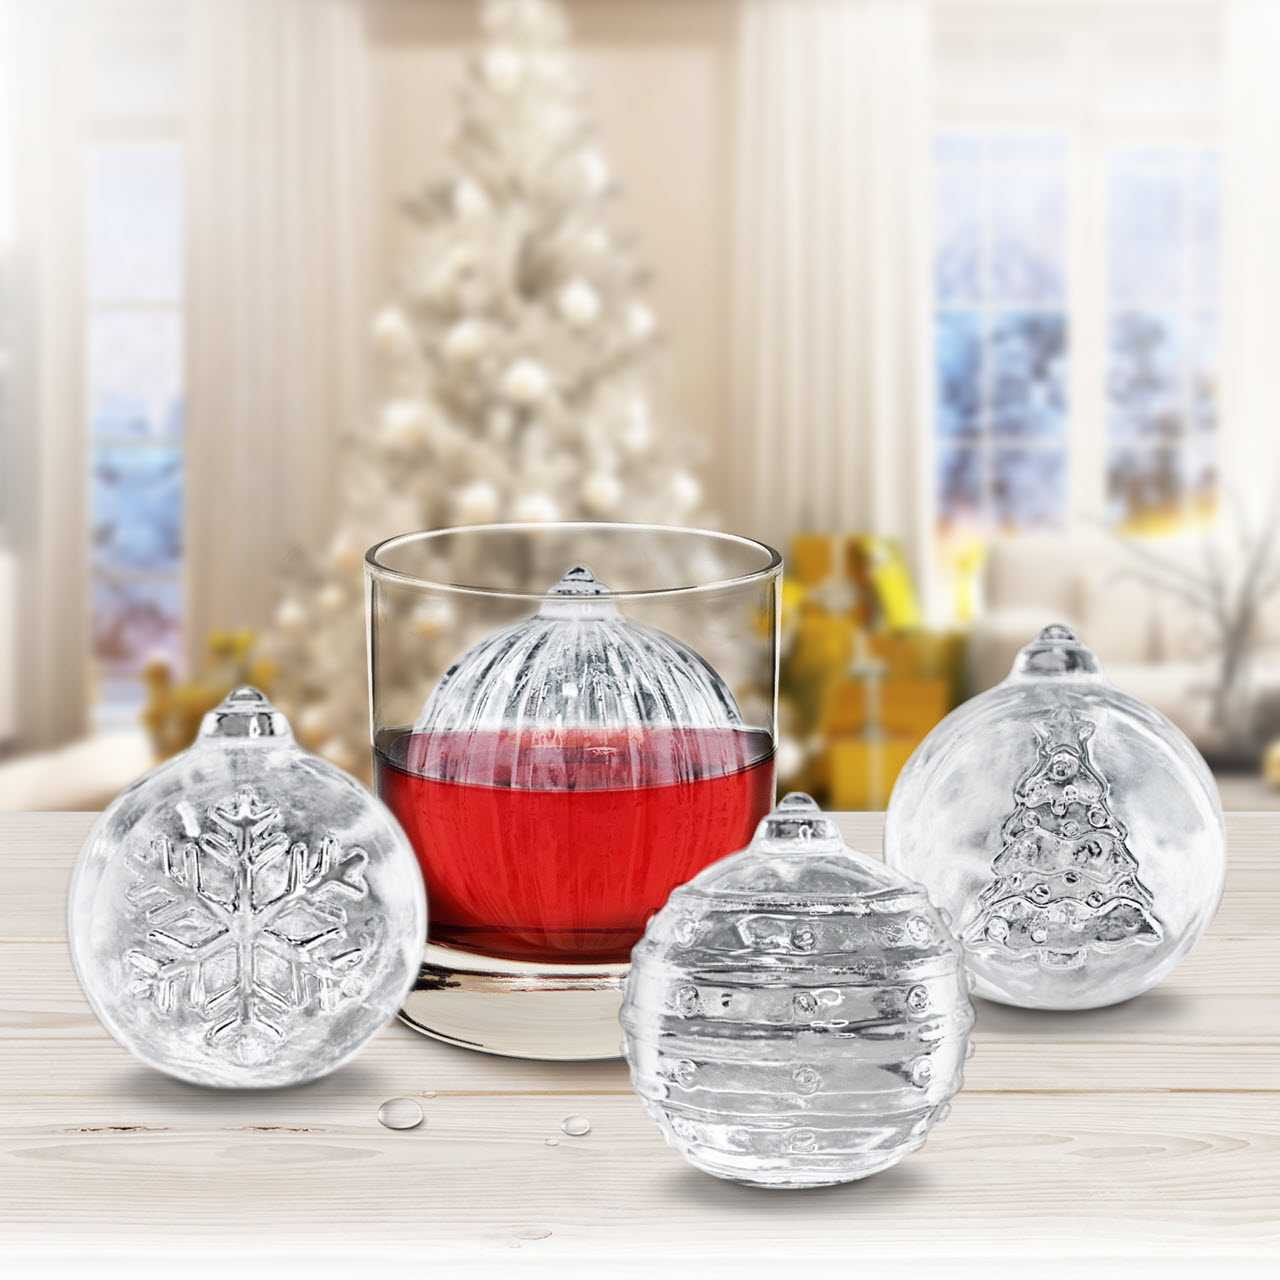 https://cdn11.bigcommerce.com/s-21kj3ntgv1/images/stencil/1280x1280/products/646/2875/Tovolo-Christmas-Ornament-Ice-Molds-Set-lifestyle__31140.1676327080.jpg?c=2